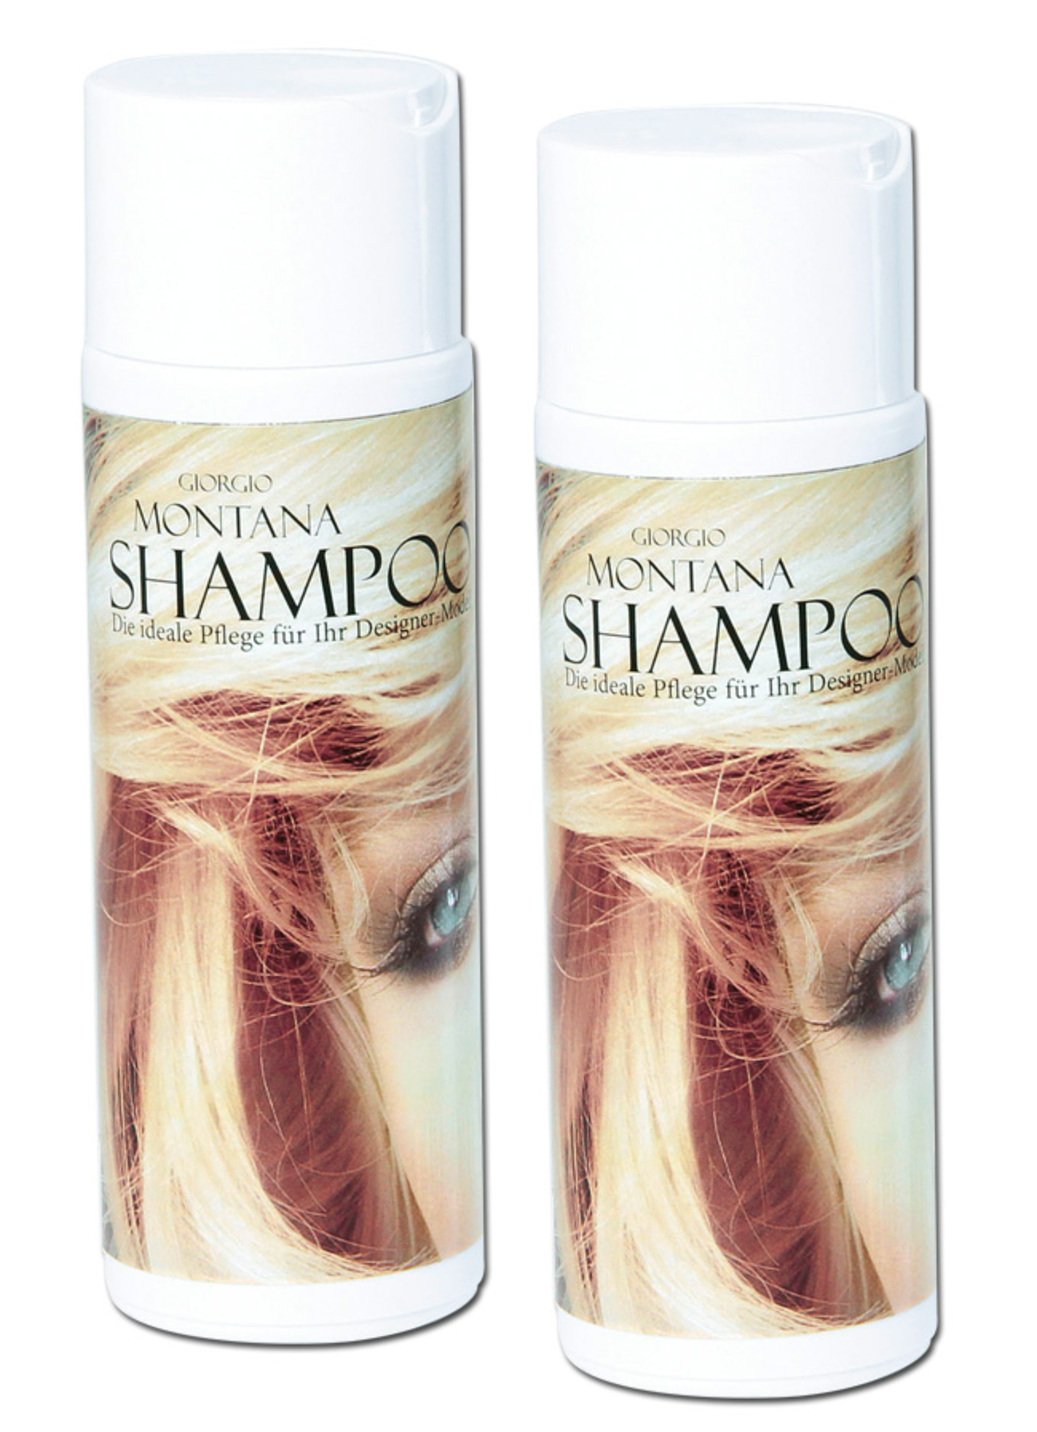 Haarstyling - Pruikshampoo of balsem voor ideale tweede haarverzorging, in Farbe , in Ausführung Shampoo, set van 2 Ansicht 1